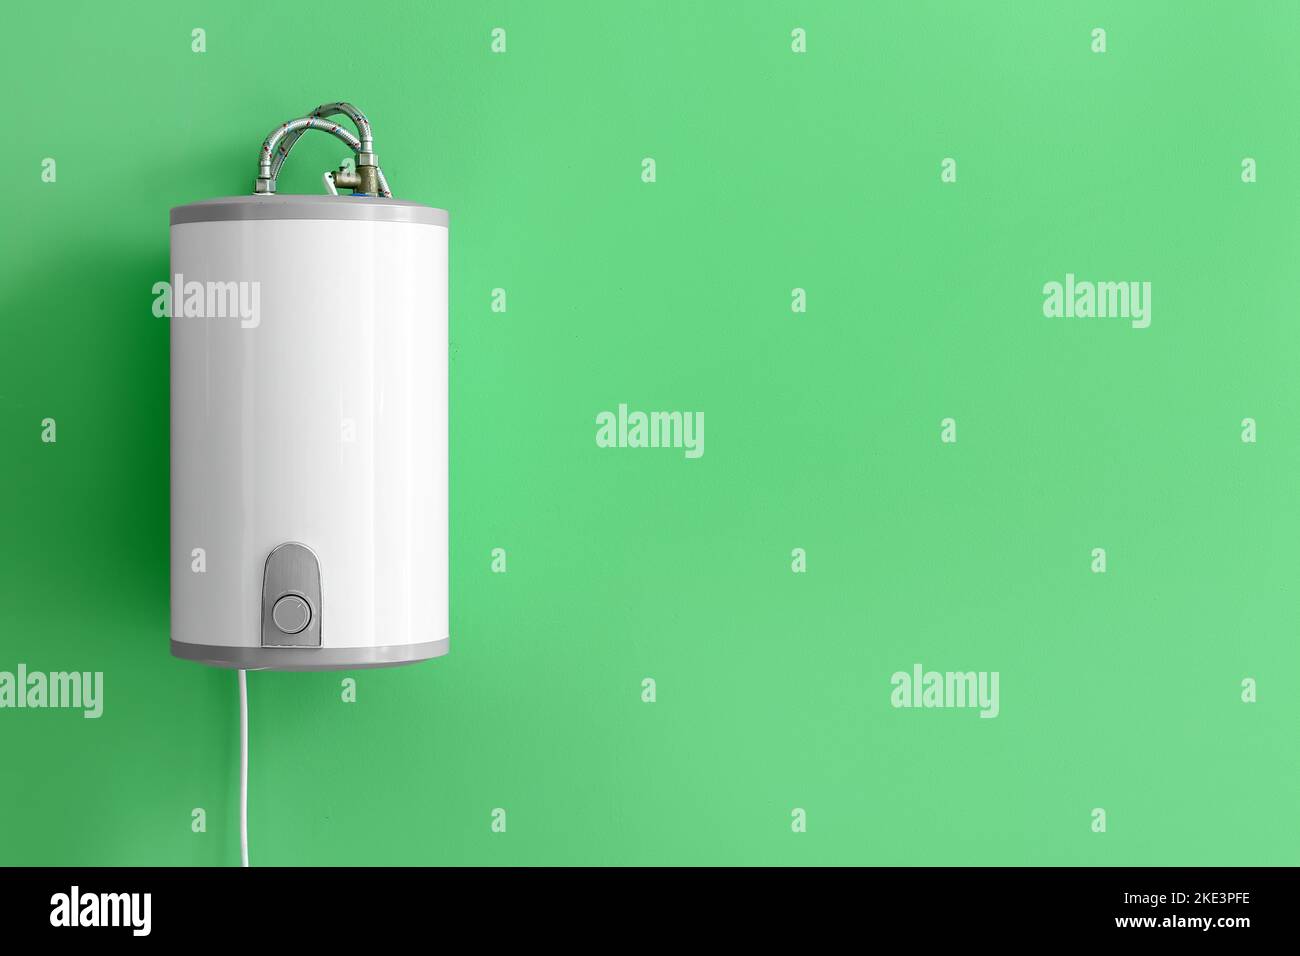 Caldera eléctrica fotografías e imágenes de alta resolución - Alamy